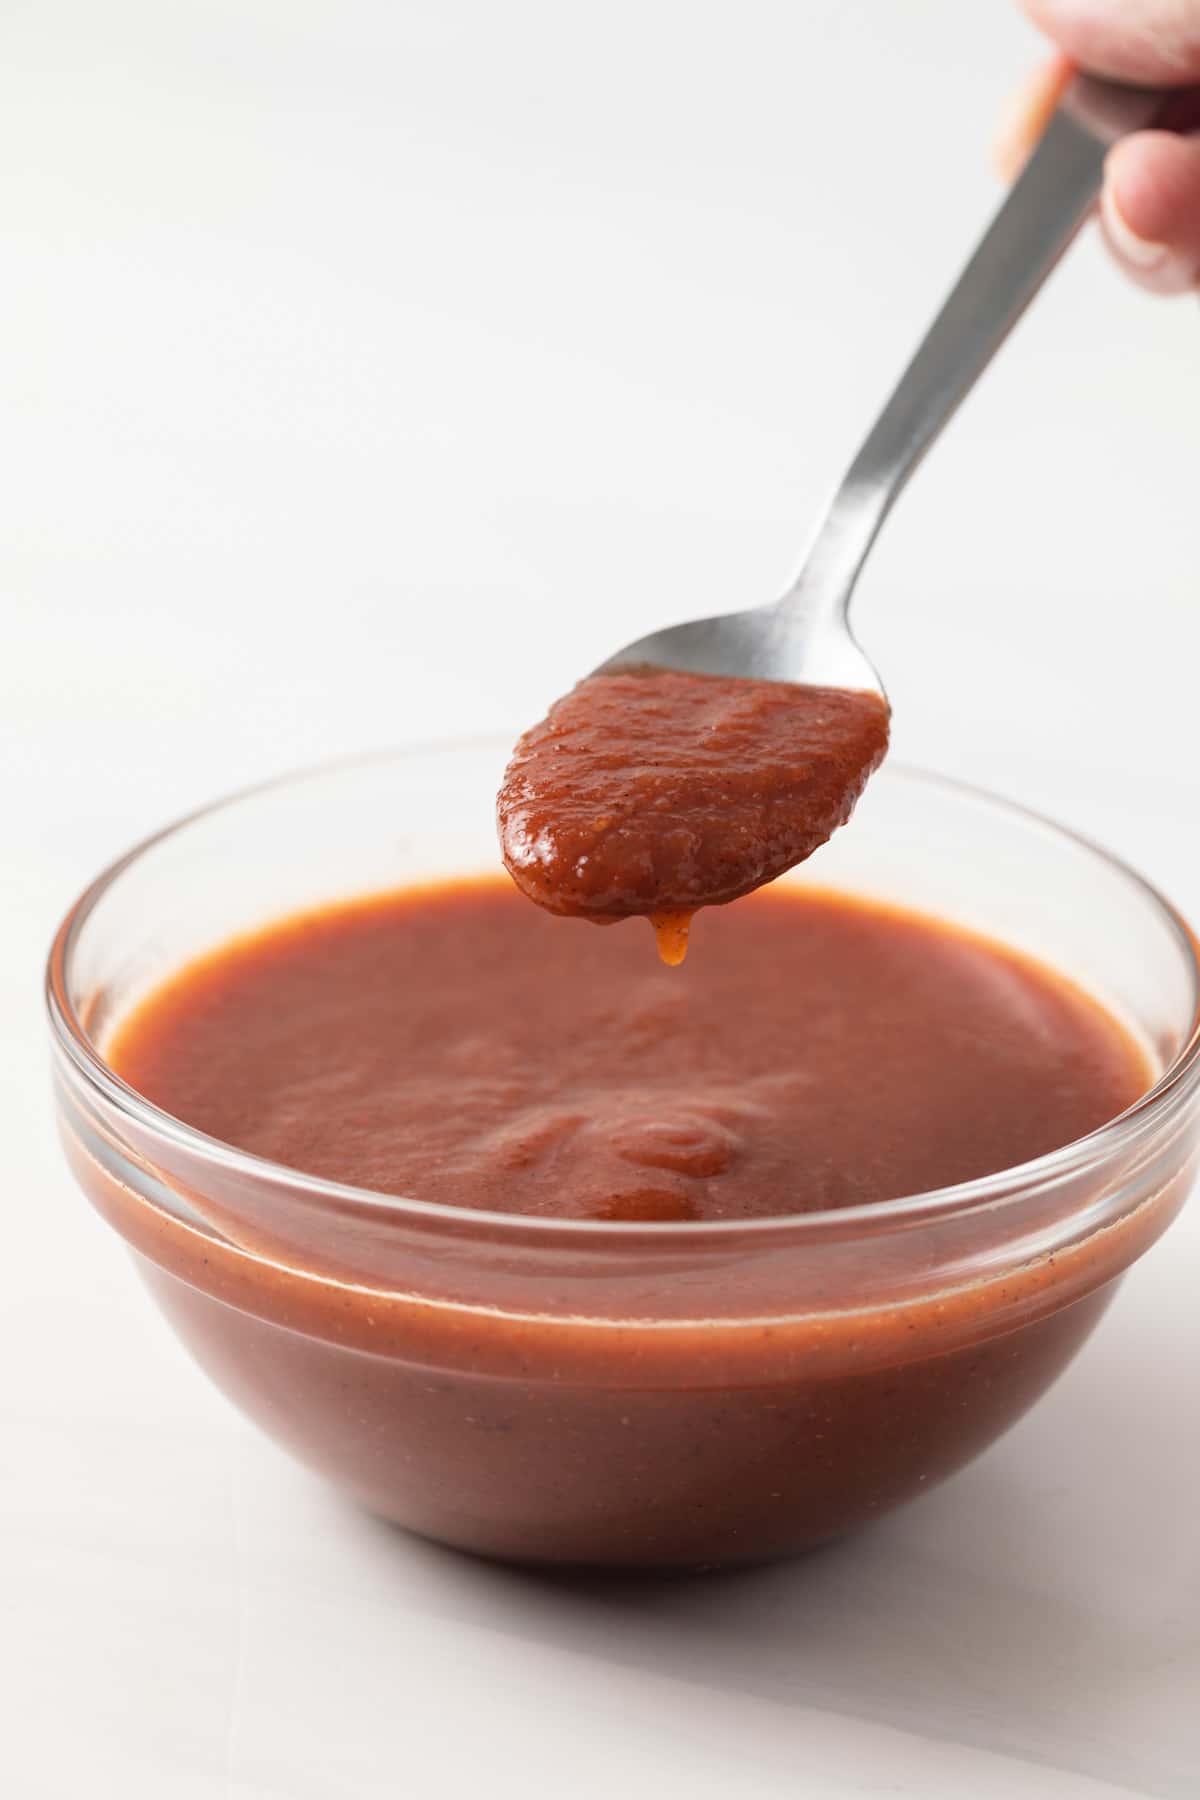 Chili sauce on spoon over glass bowl.